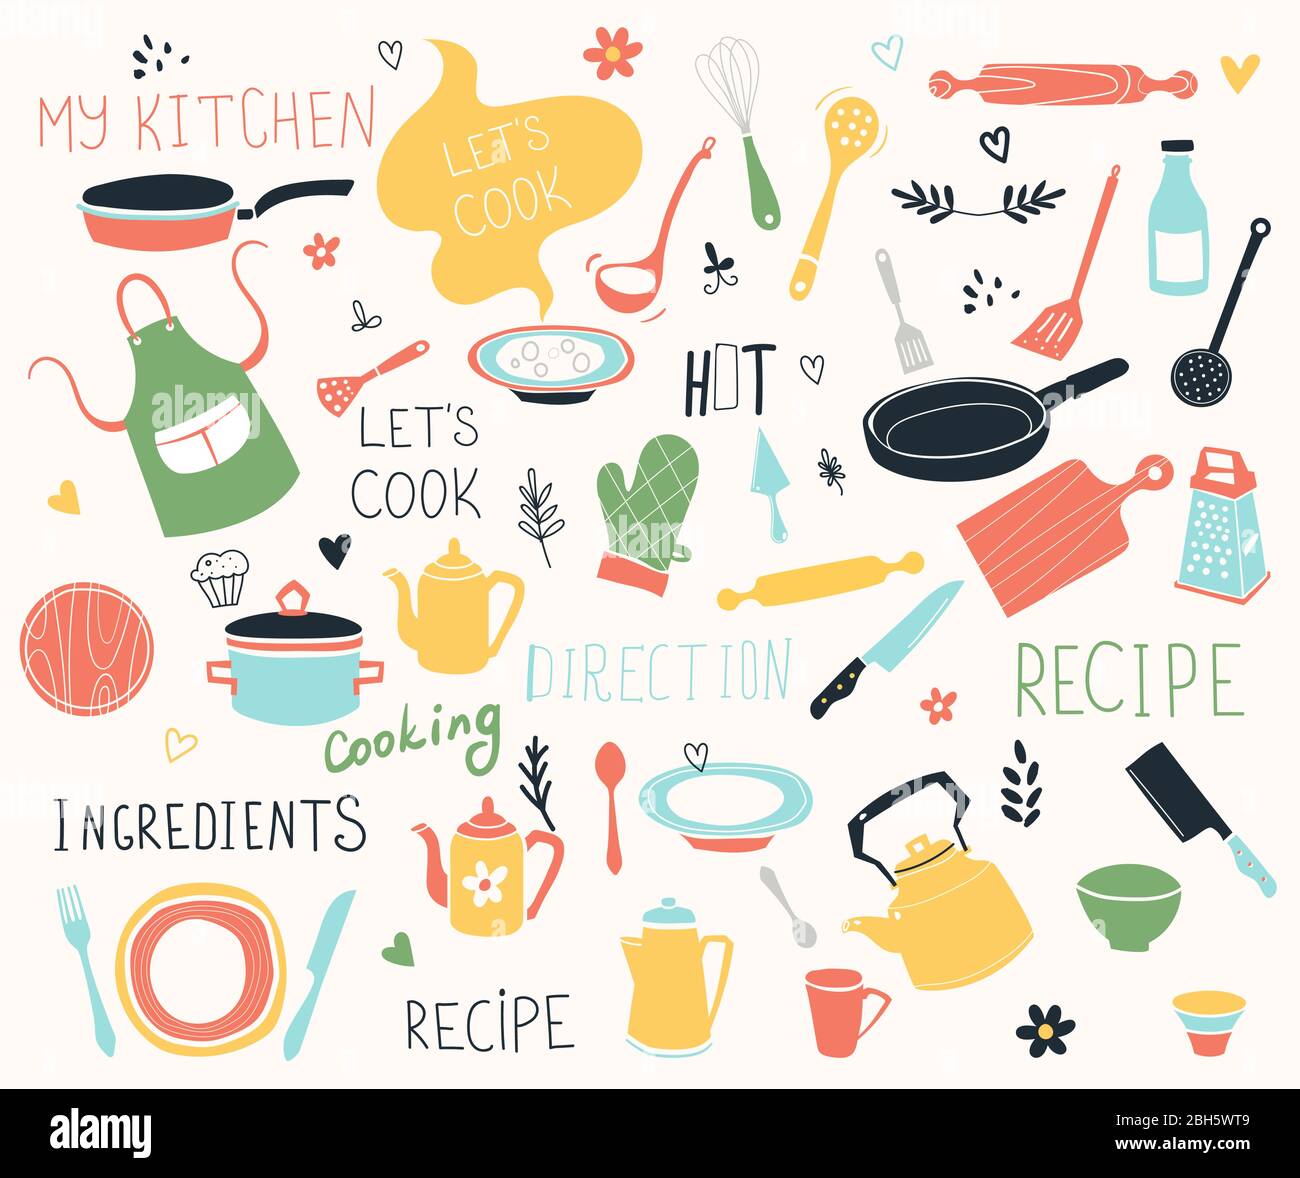 https://c8.alamy.com/comp/2BH5WT9/kitchen-doodle-vector-icon-set-for-modern-recipe-card-template-set-for-cookbook-menu-creator-2BH5WT9.jpg